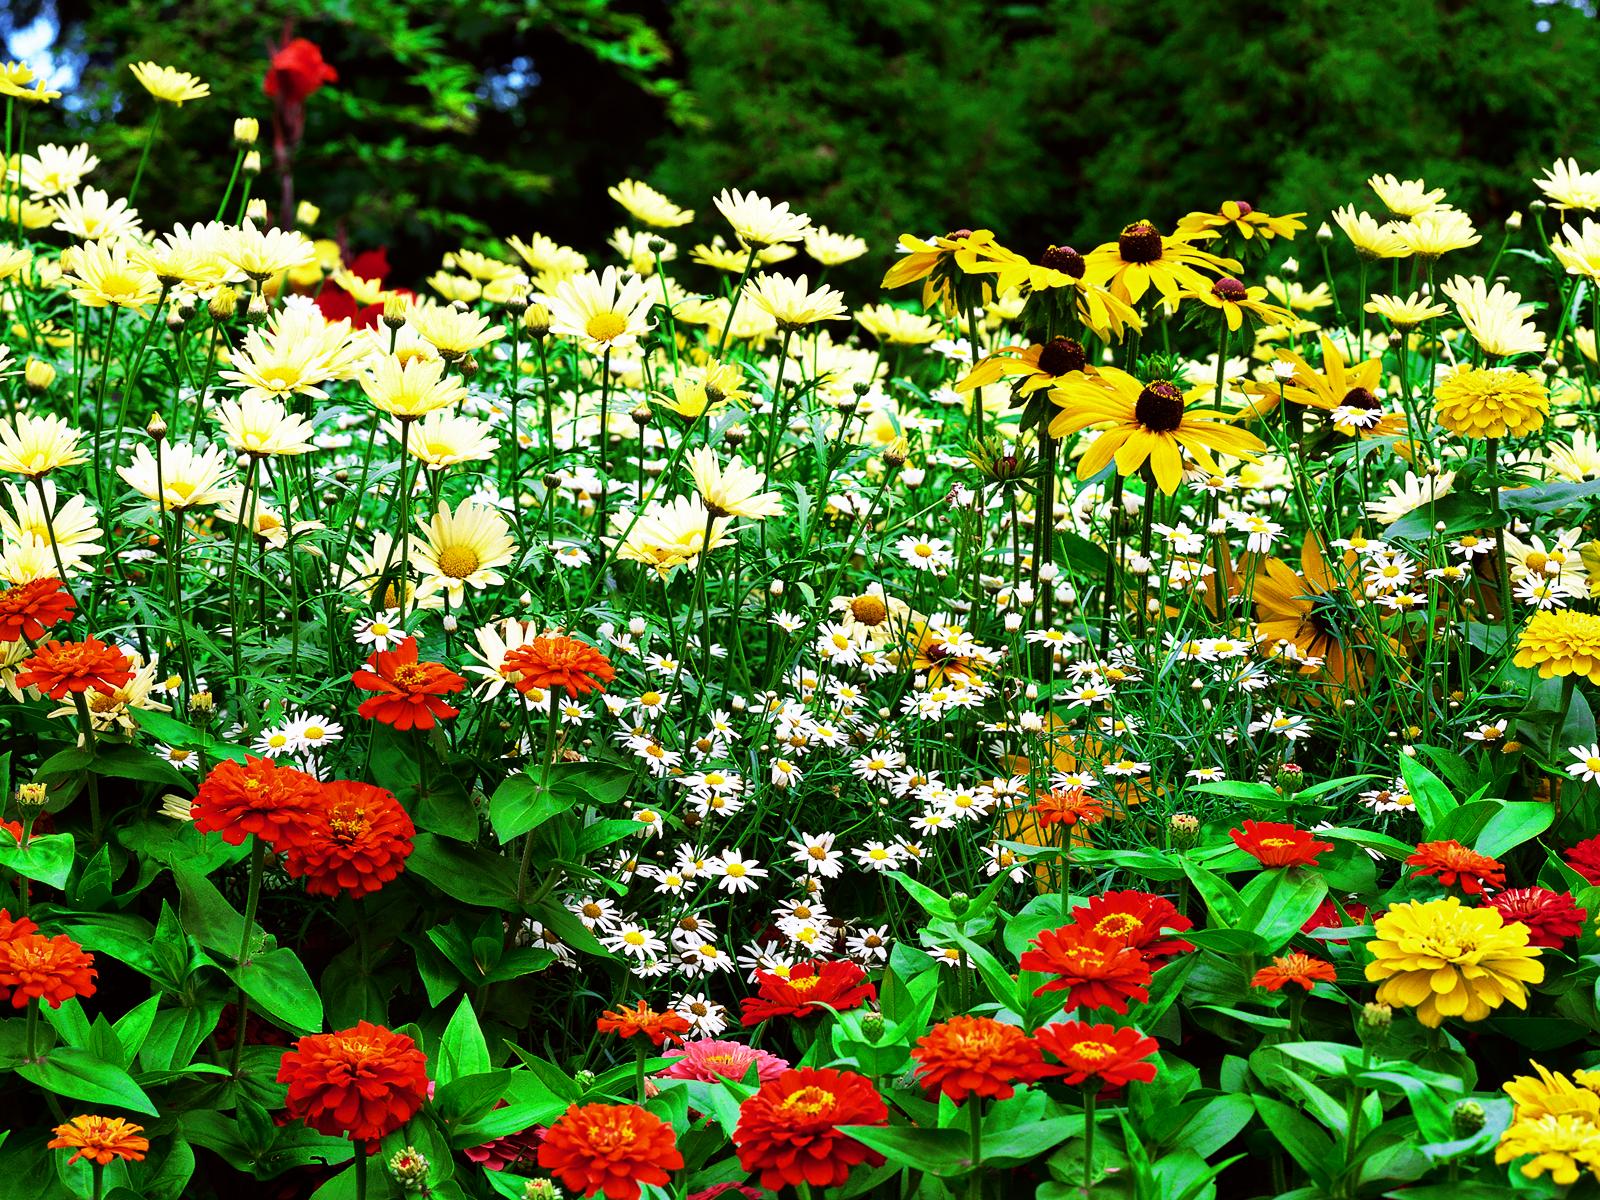 Garden Photos Hd Free Download Wallpaper Backgrounds